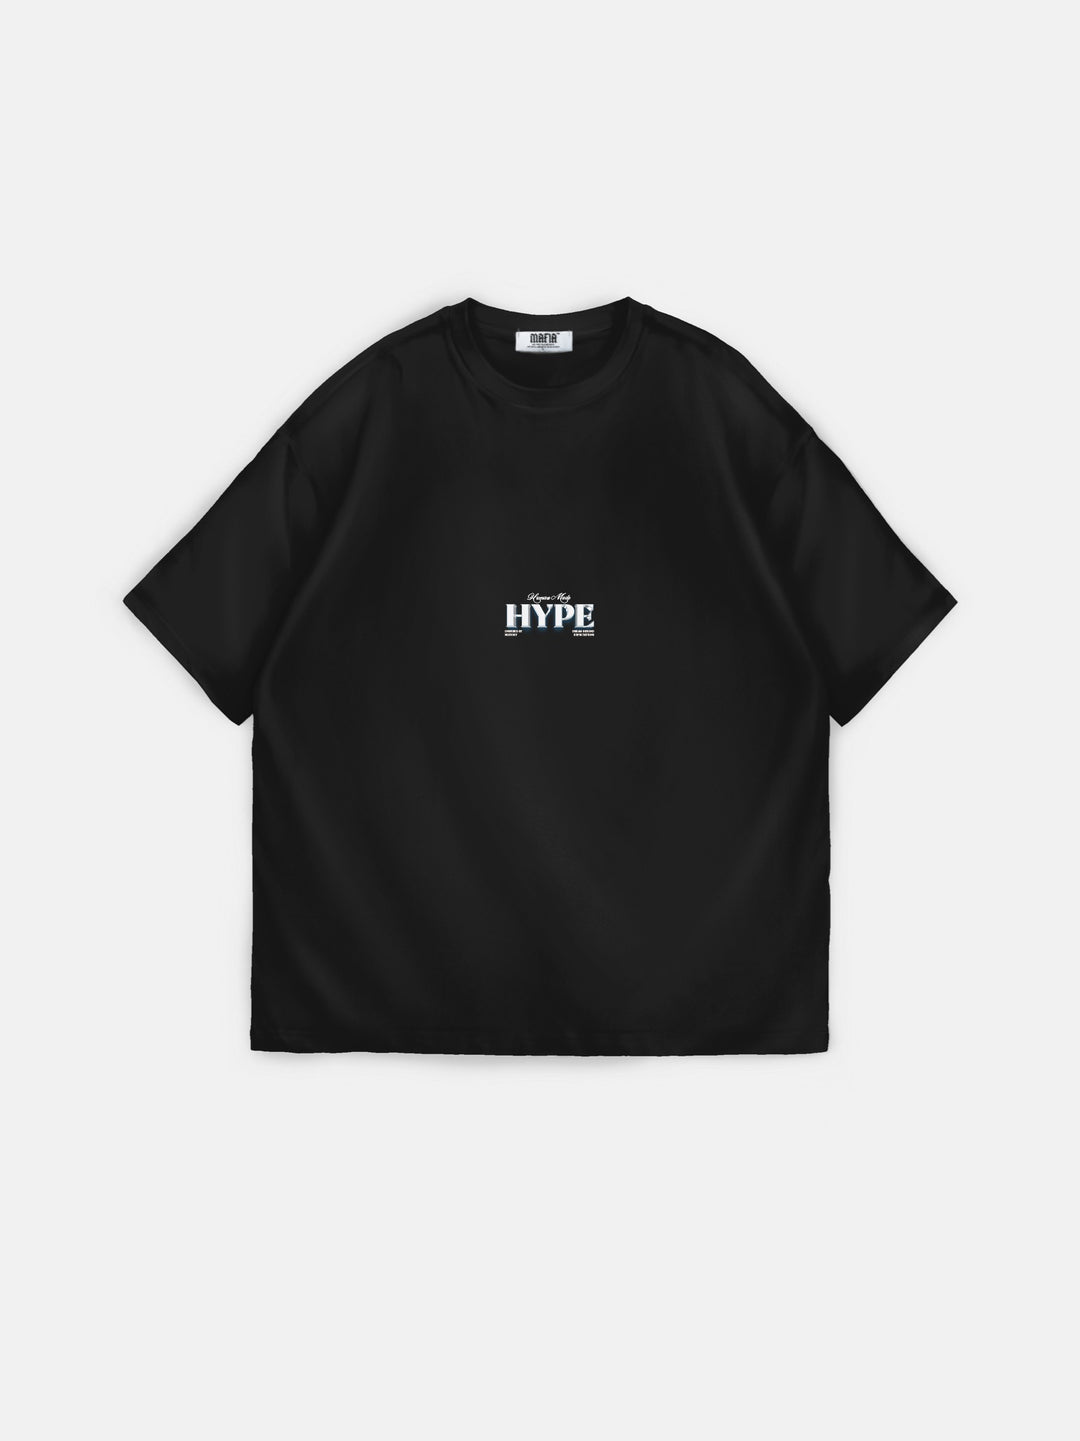 Oversize Hype T-Shirt - Black